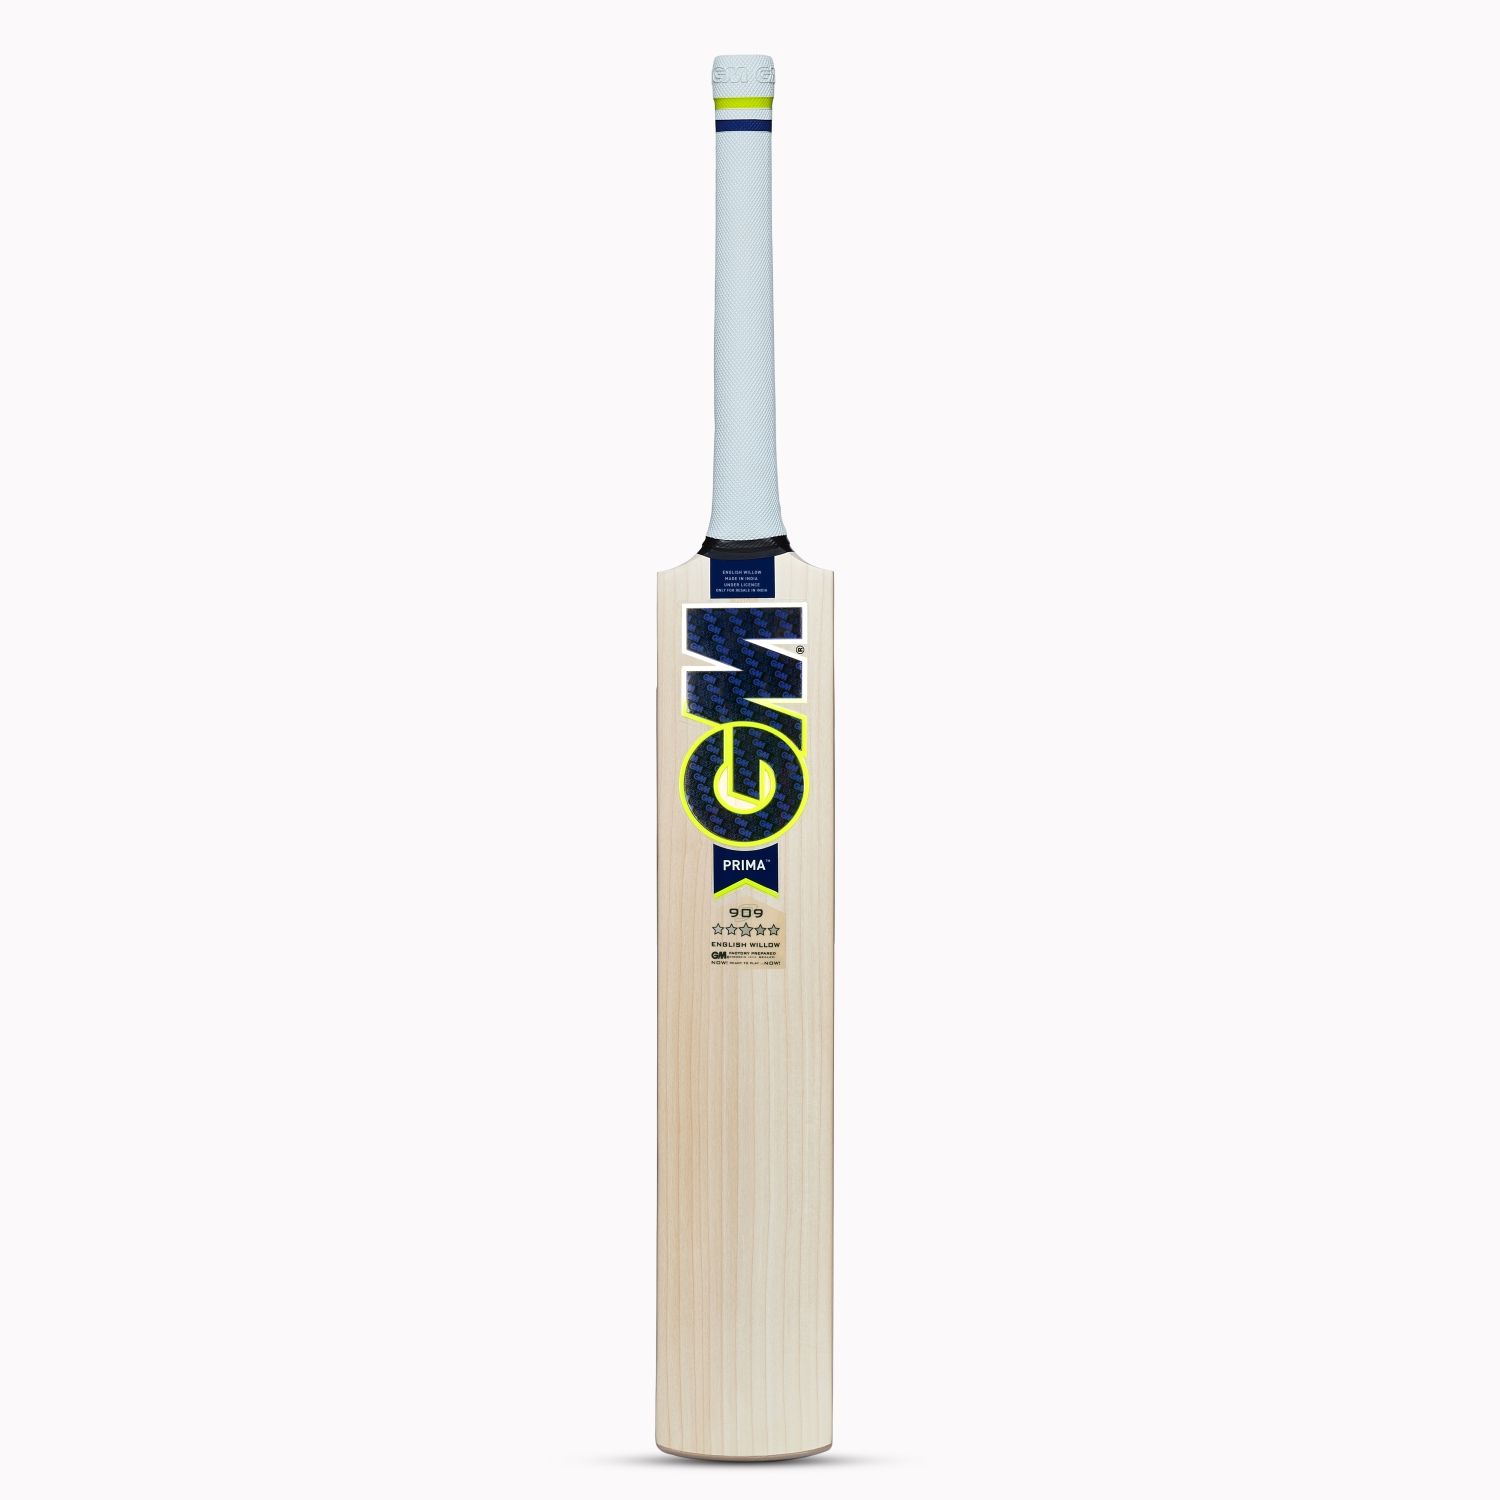 Prima 909 English Willow Cricket Bat